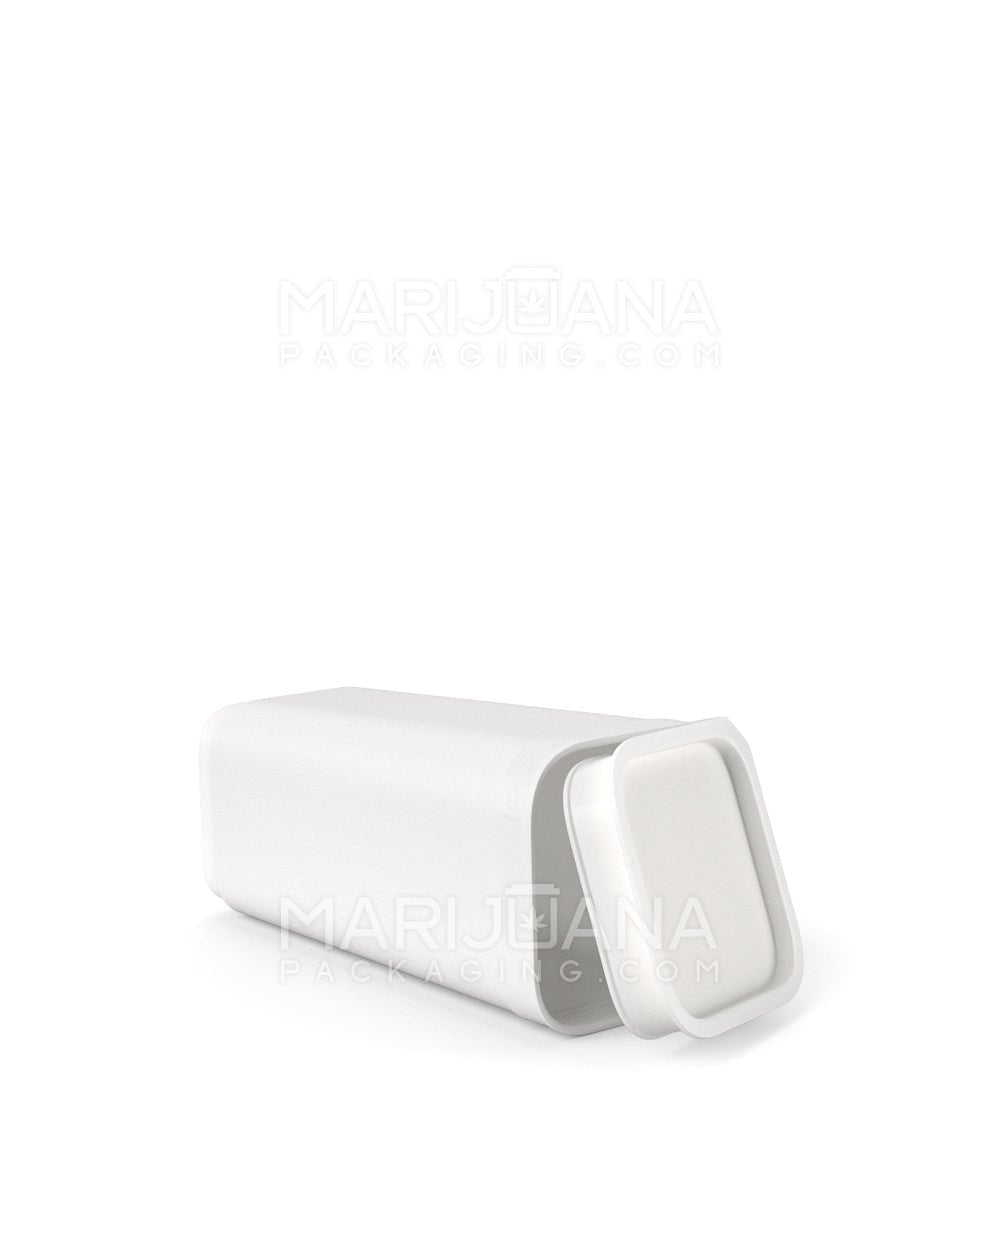 POLLEN GEAR | 100% Recyclable Opaque White Pop Box Pop Top Bottles | 30dr - 7g - 373 Count - 6